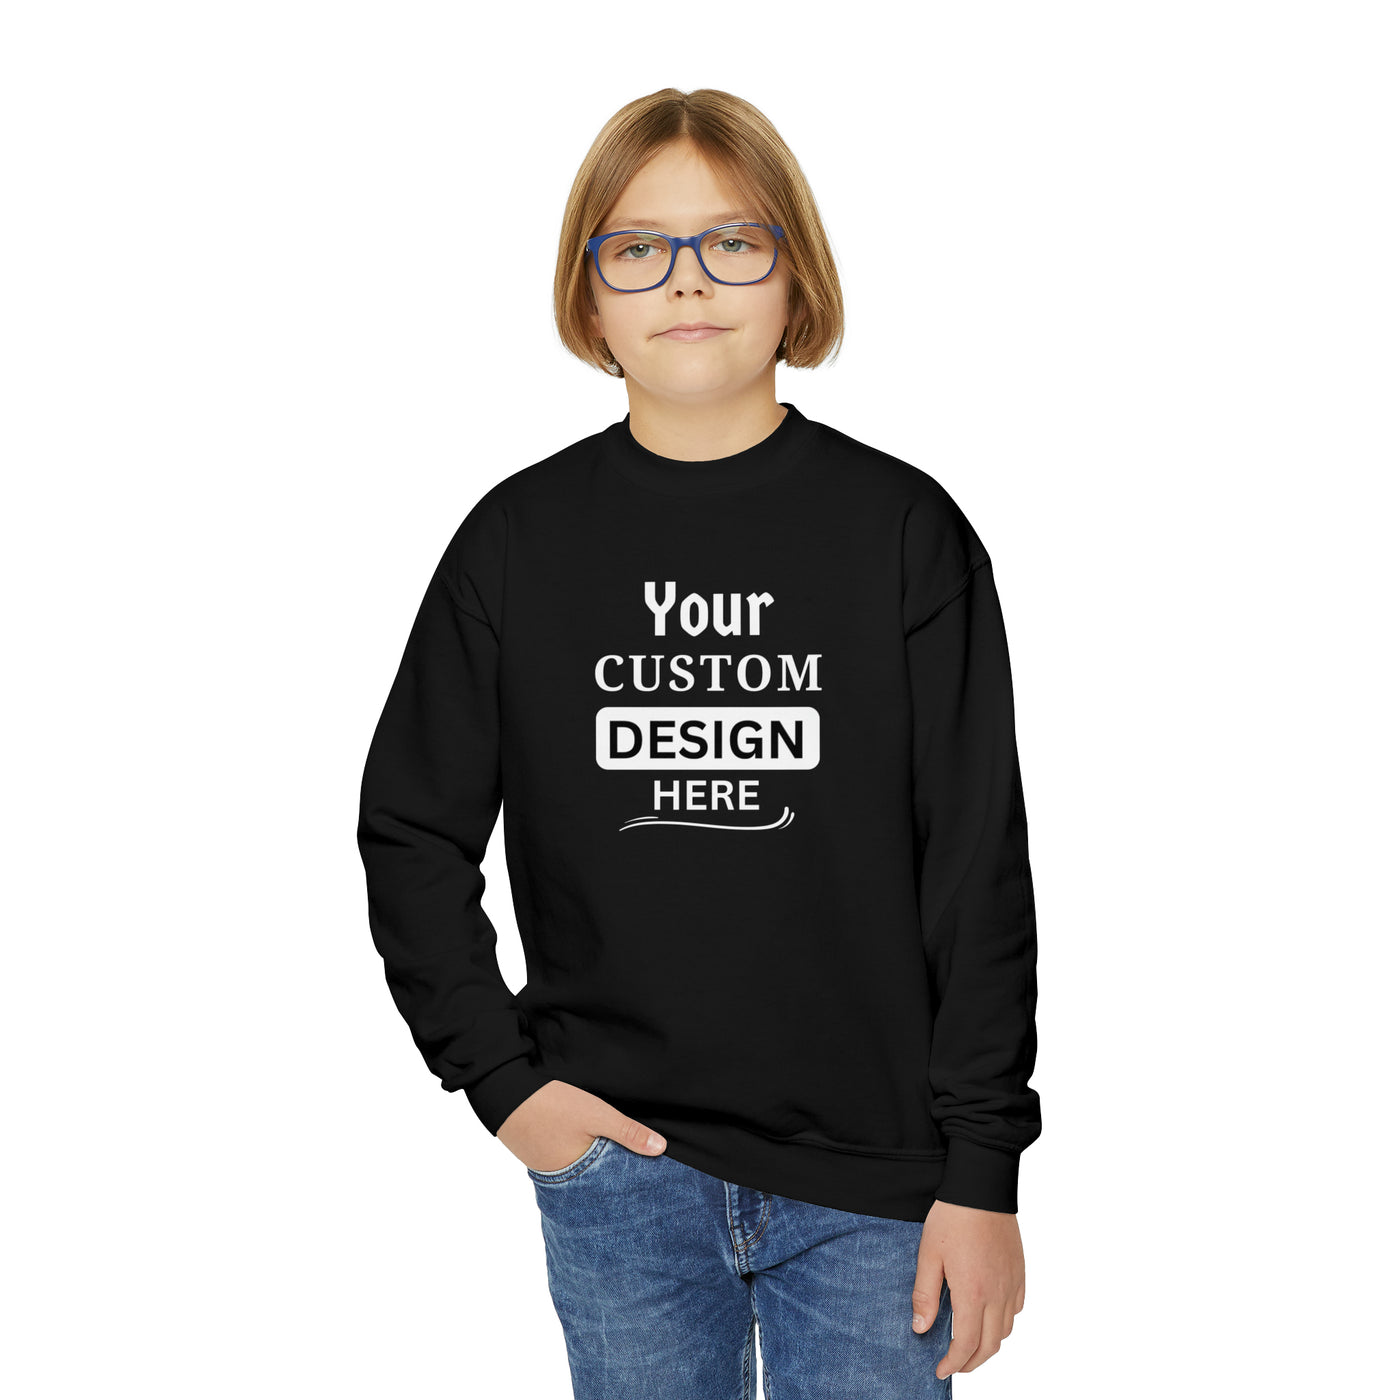 Custom Youth Crewneck Sweatshirt